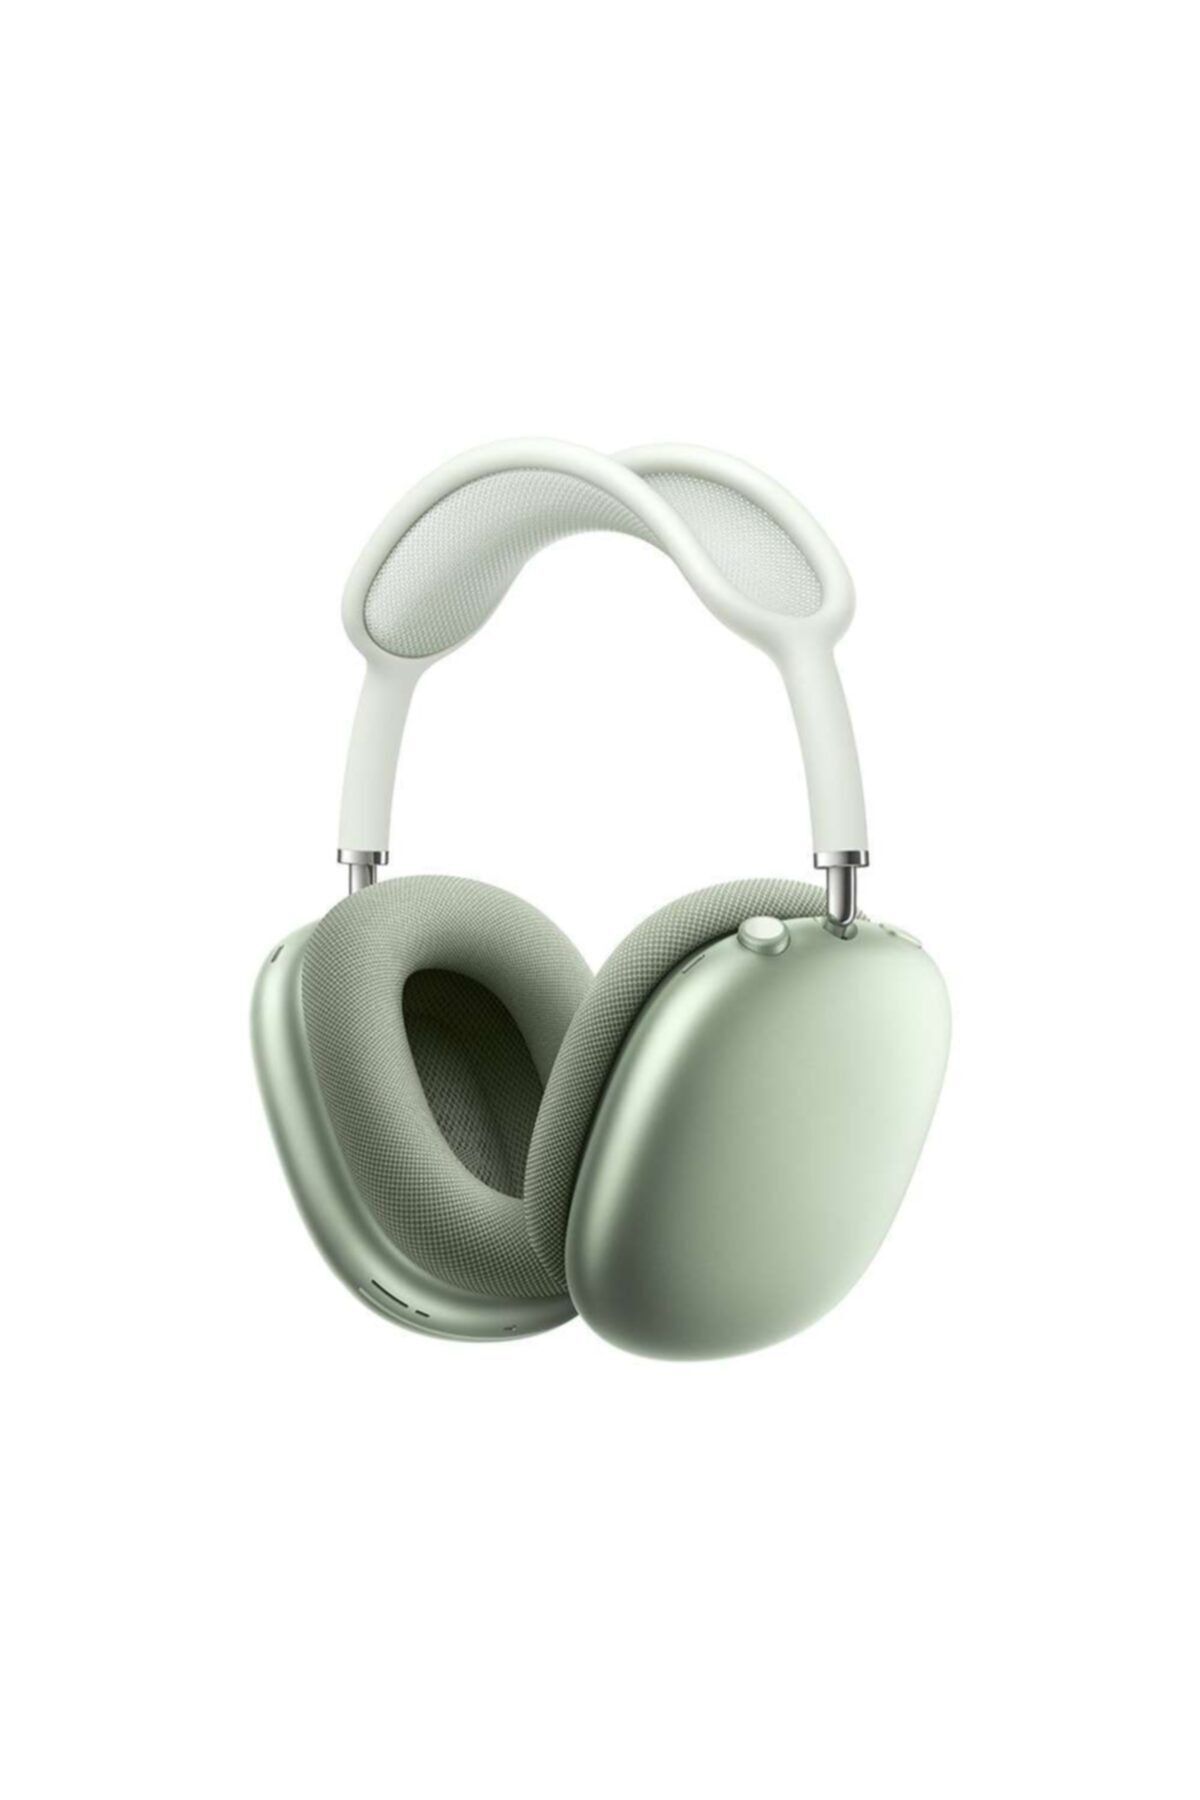 Apple Airpods Max Bluetooth Kulaküstü Kulaklık Yeşil Mgyn3tu/a